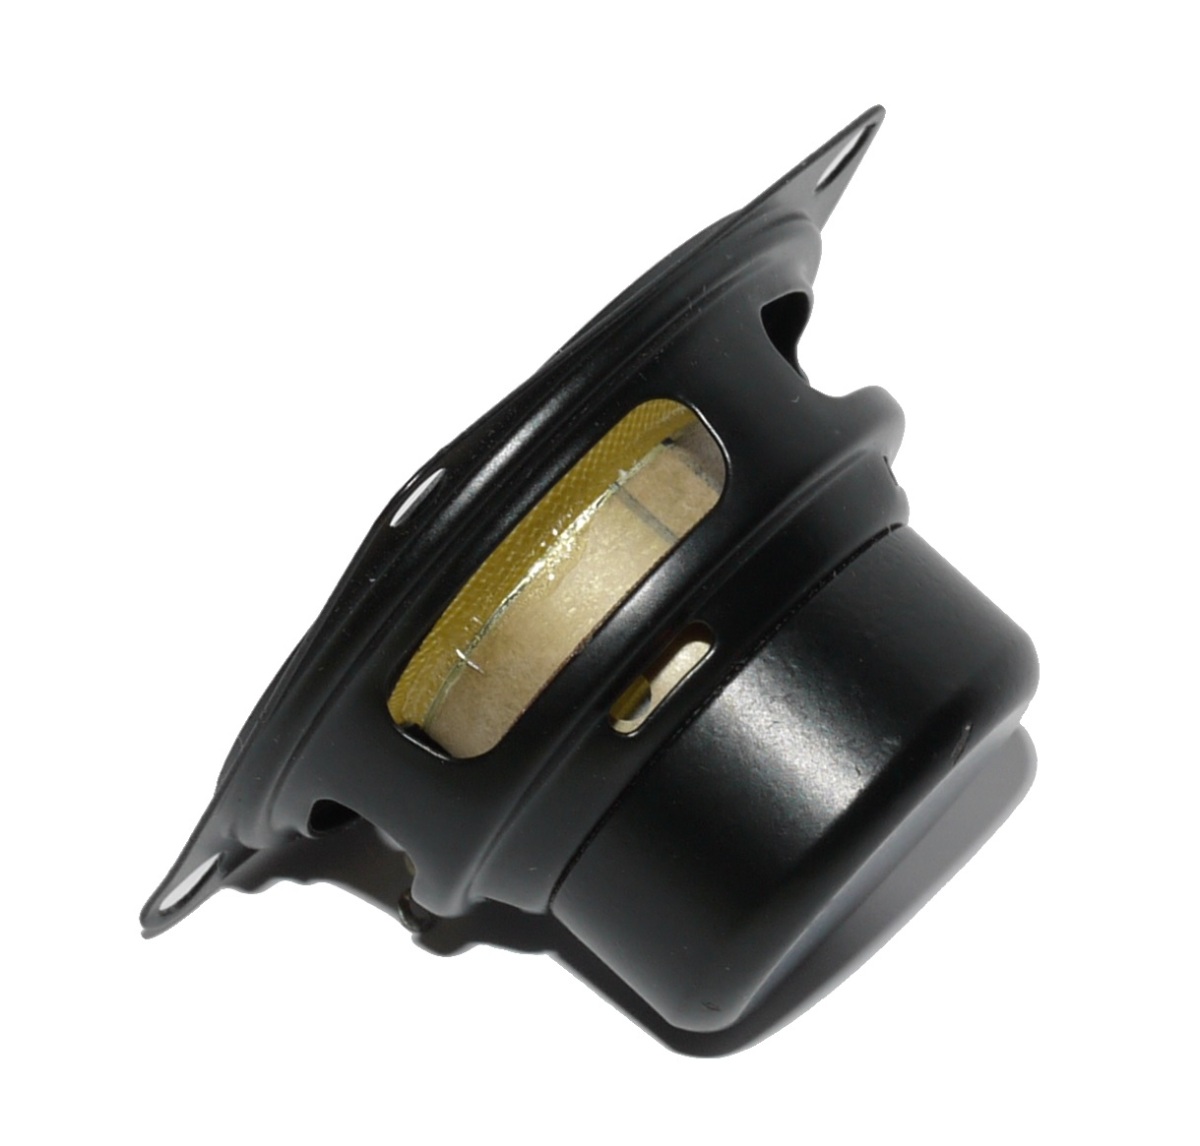 Claret Audio F-LINE SZKE-53 yellow alamido fiber 53mm 8Ω full range speaker / 5 centimeter small size speaker unit ( pair )